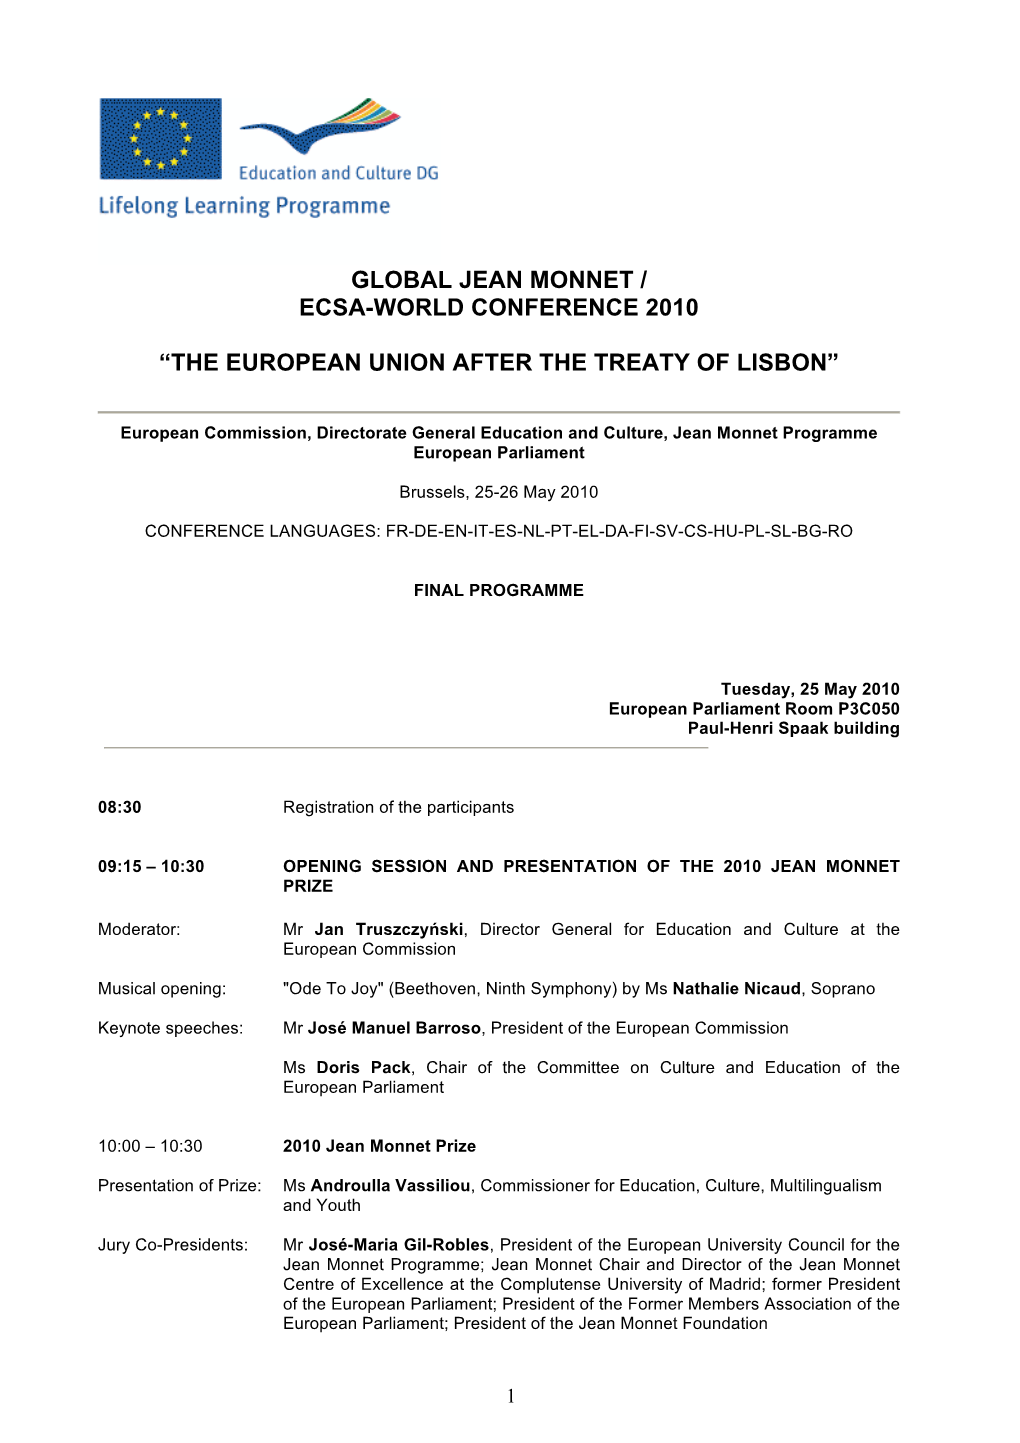 Global Jean Monnet / Ecsa-World Conference 2010